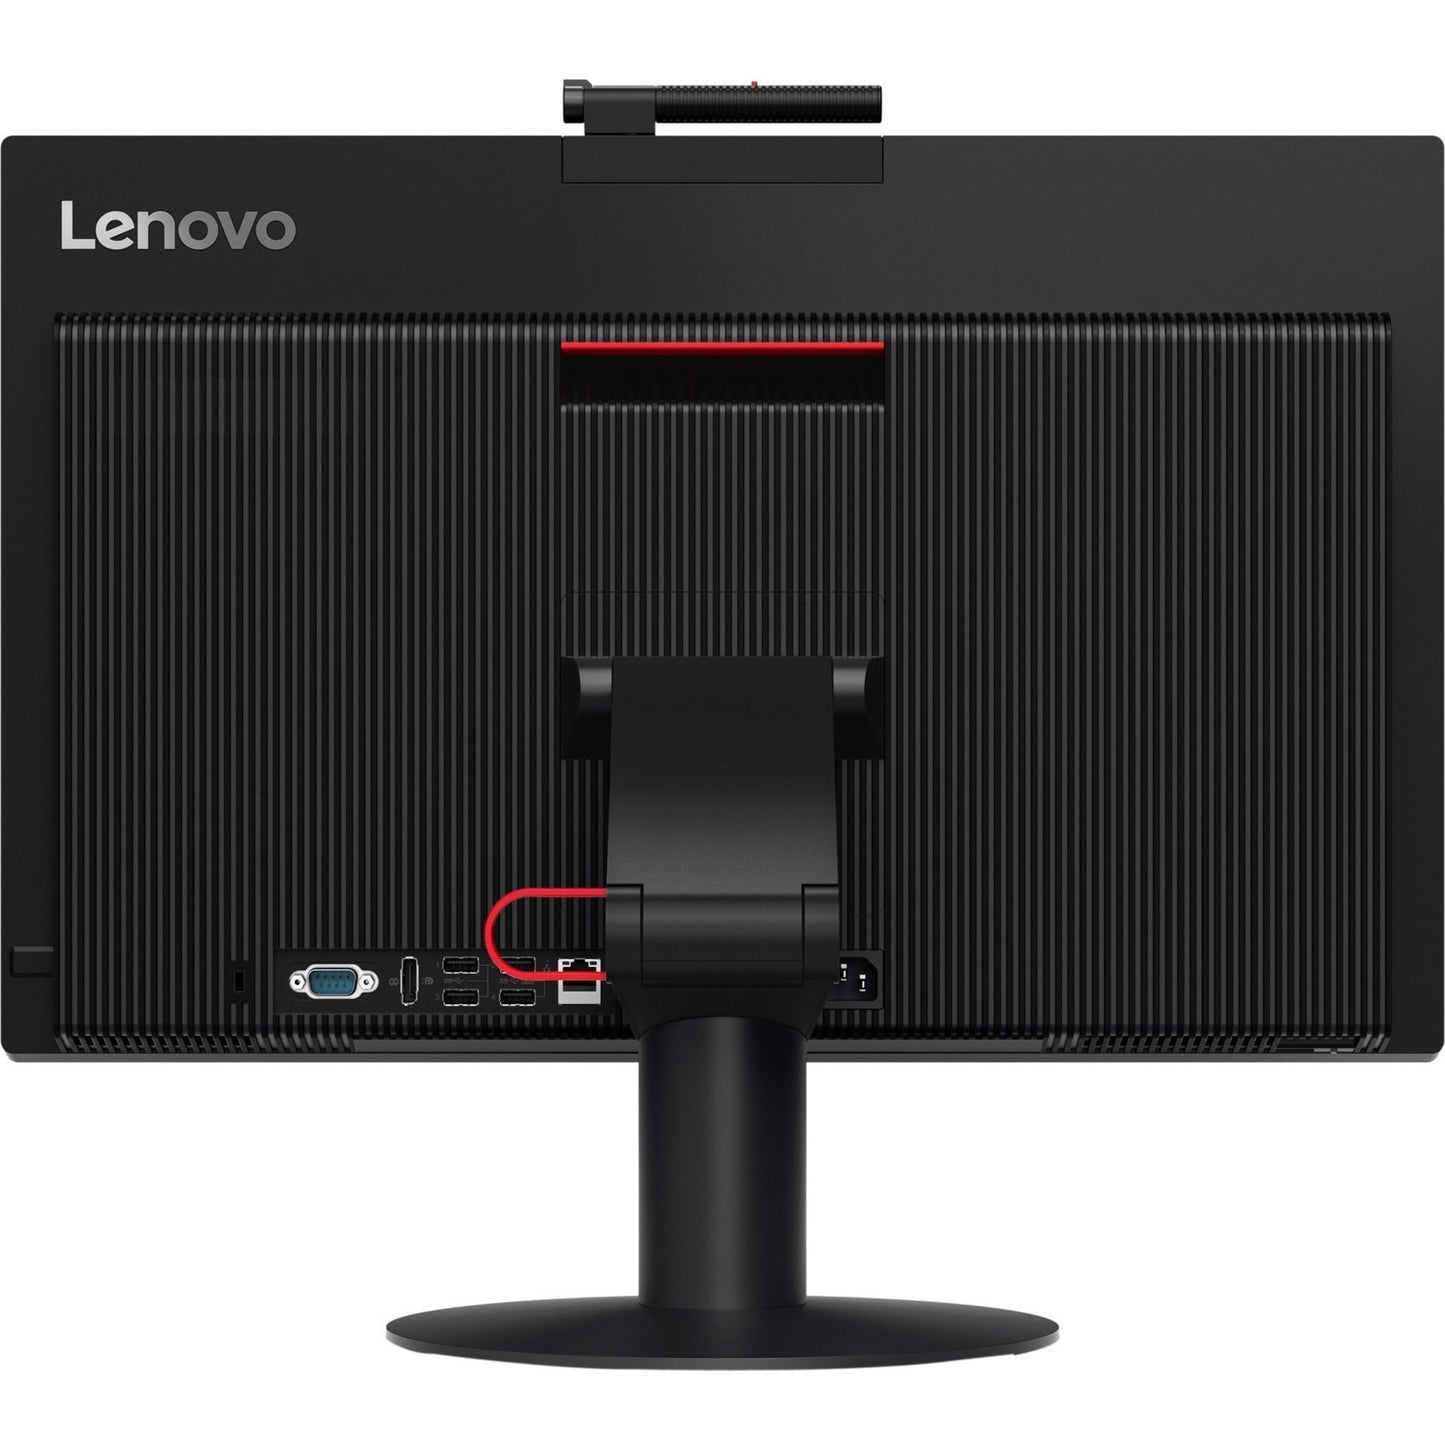 Lenovo ThinkCentre M920z 10S7S0GF00 All-in-One Computer - Intel Core i5 8th Gen i5-8400 2.80 GHz - 8 GB RAM DDR4 SDRAM - 128 GB SSD - 23.8" 1920 x 1080 - Desktop